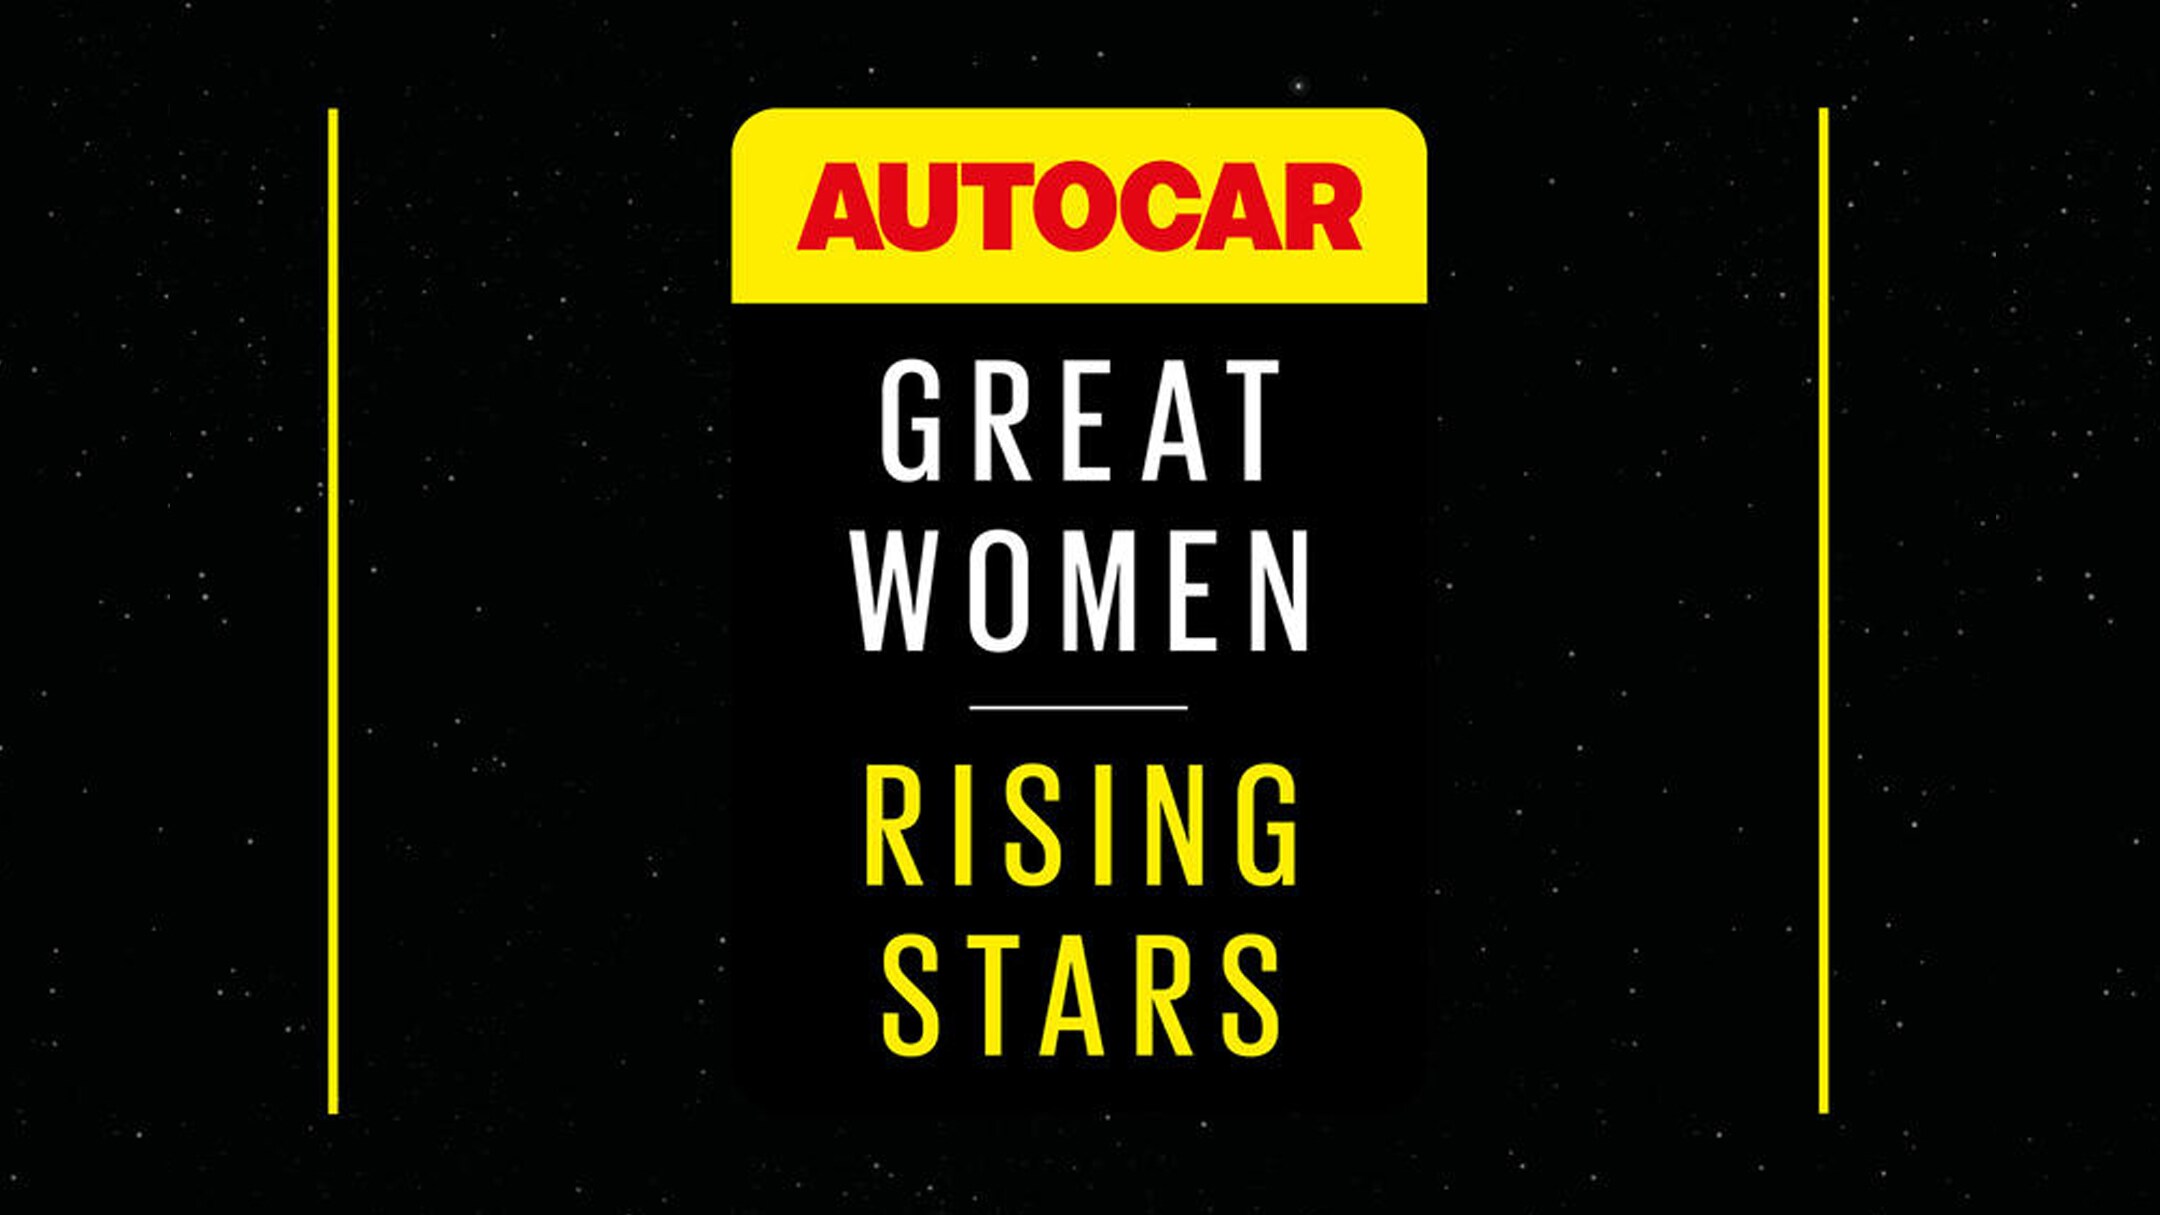 Autocar. Great women. Rising stars